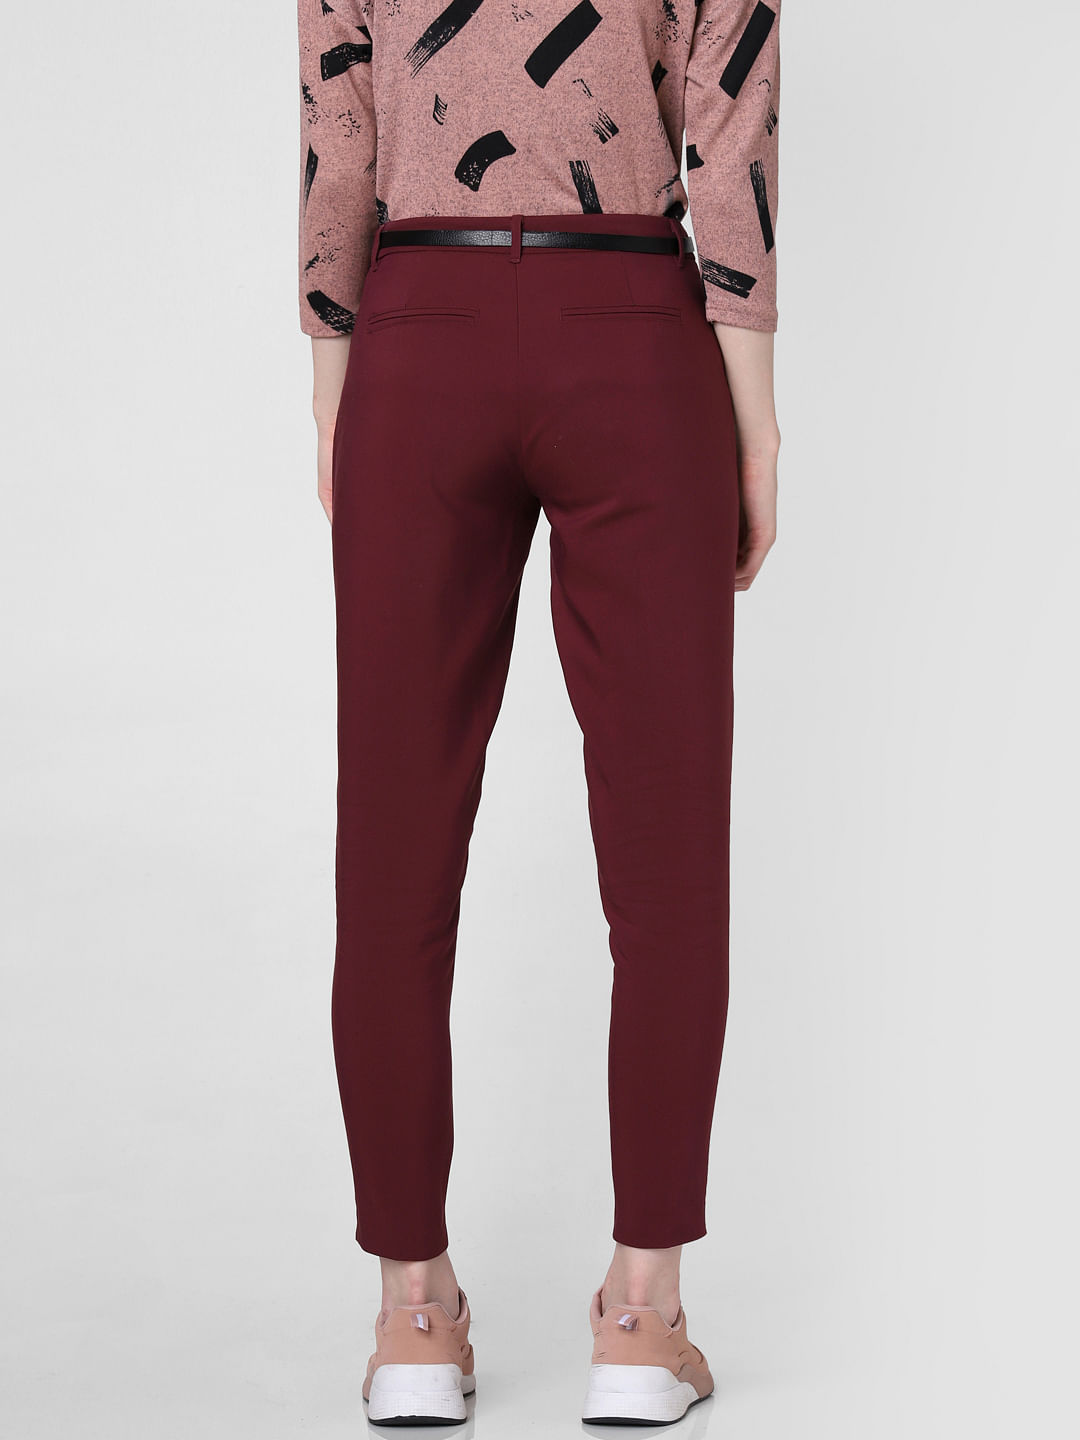 Zara Burgundy High Waist Trousers Pants Womens Fashion Bottoms Other  Bottoms on Carousell